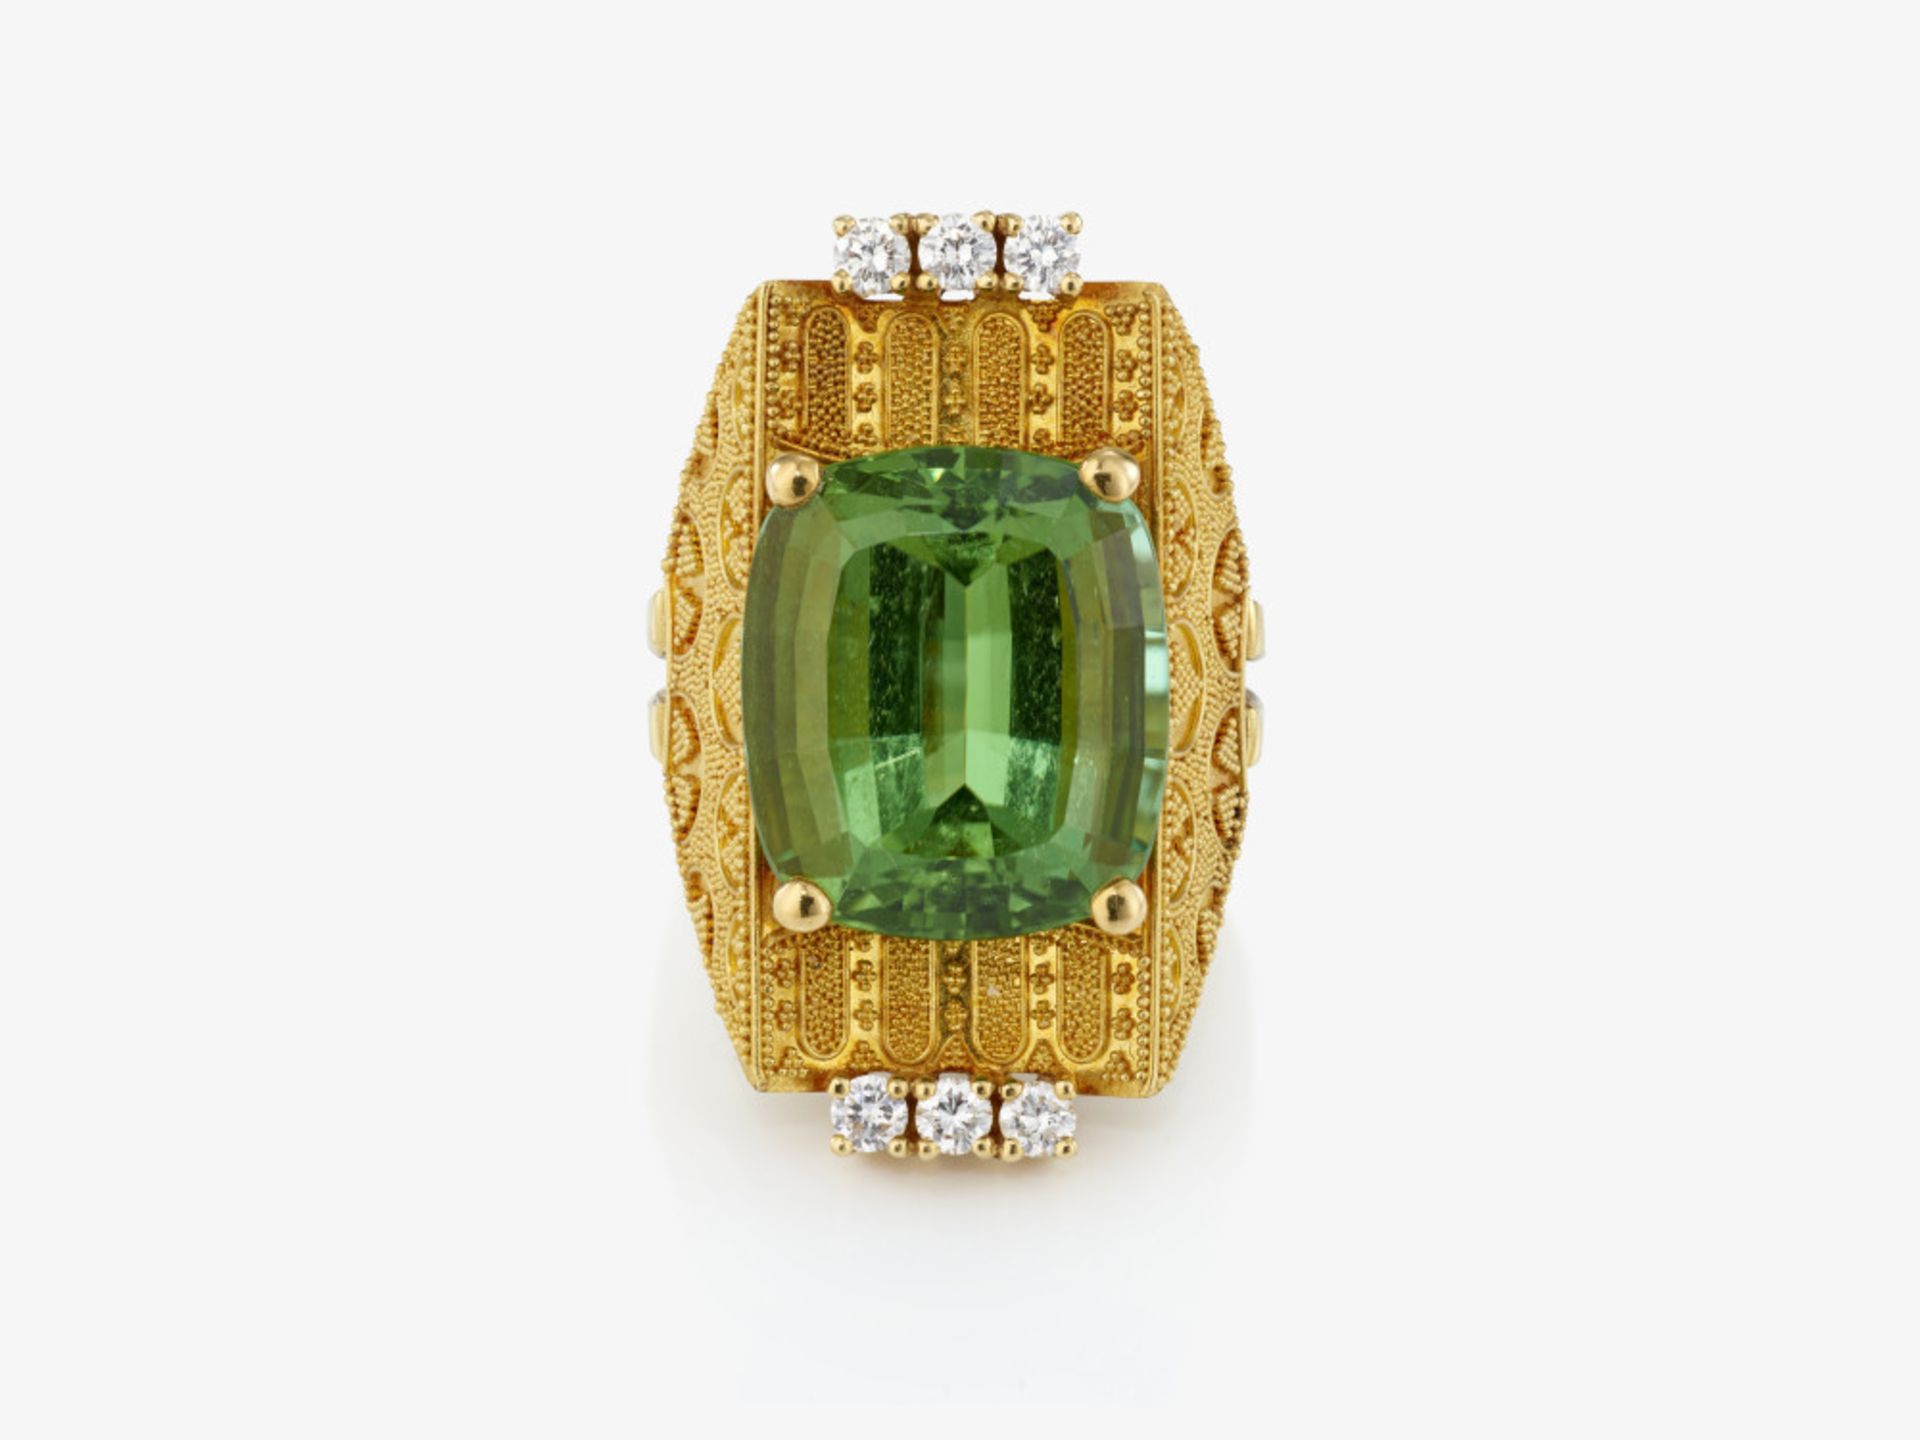 A ring with green tourmaline and brilliant-cut diamonds - Nuremberg, Juwelier SCHOTT - Image 2 of 2